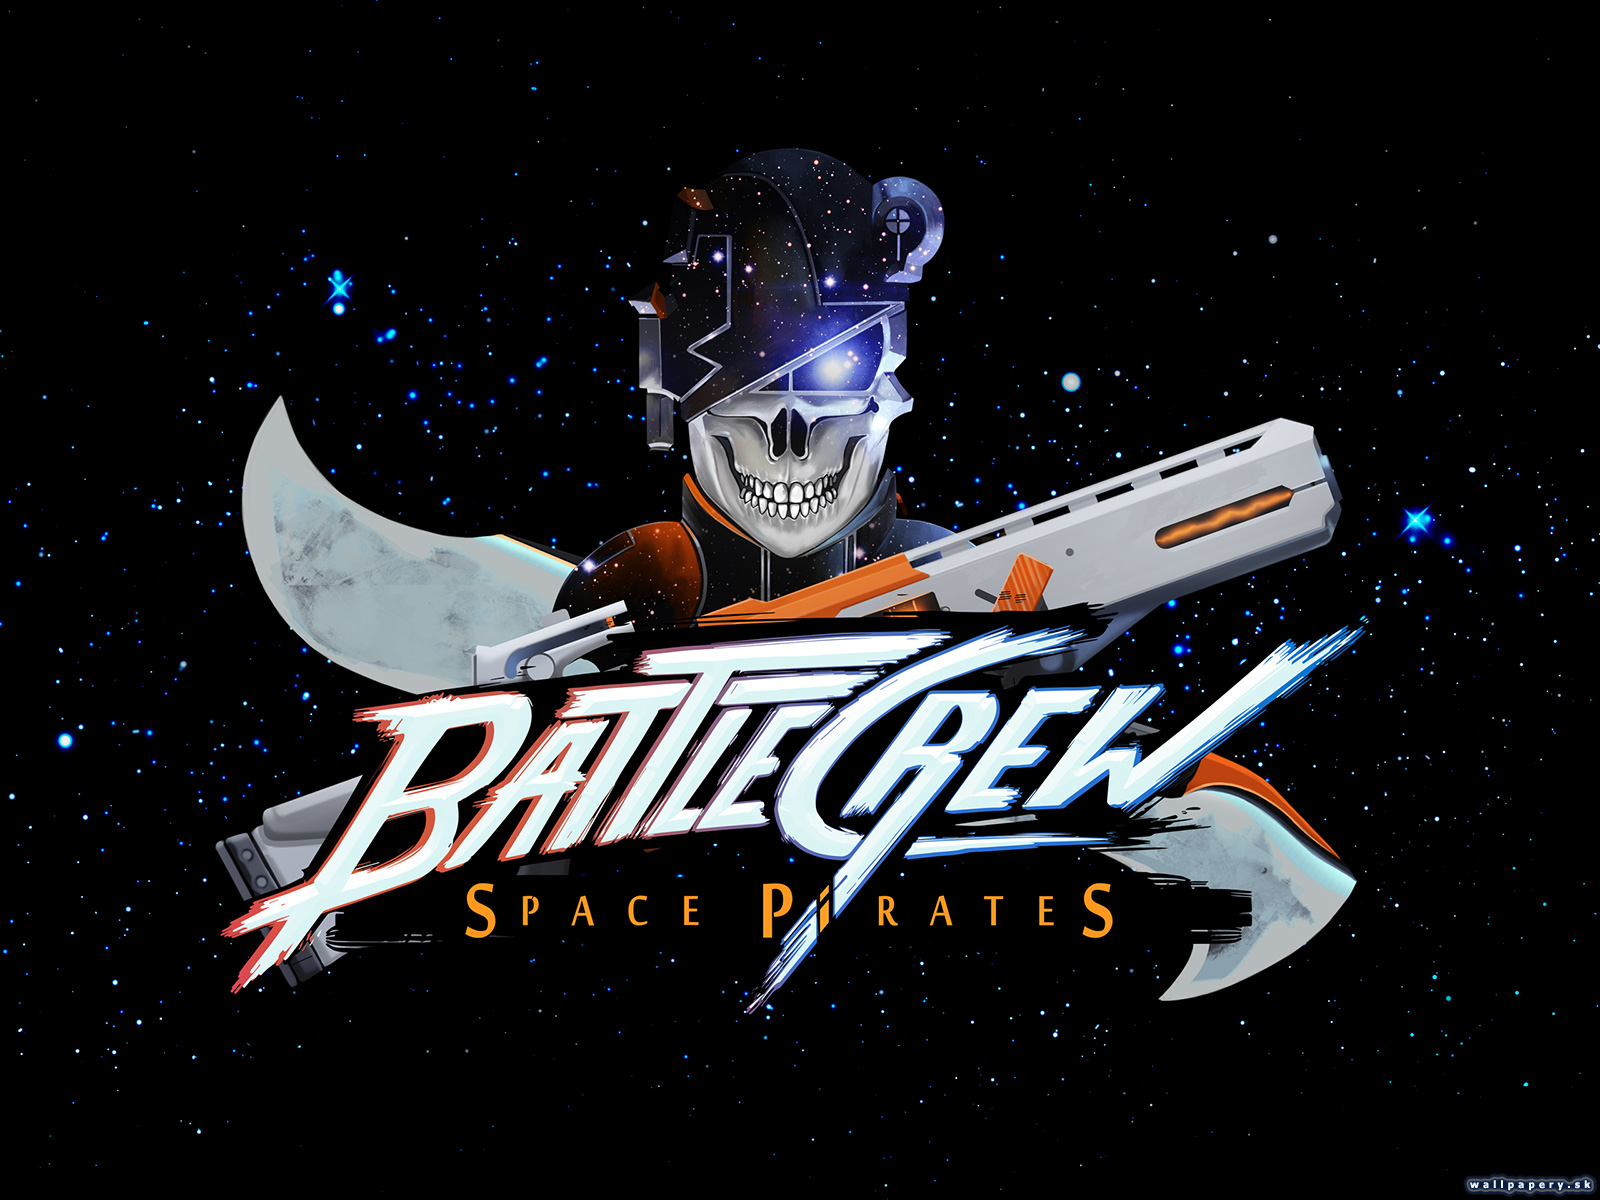 BATTLECREW: Space Pirates - wallpaper 3